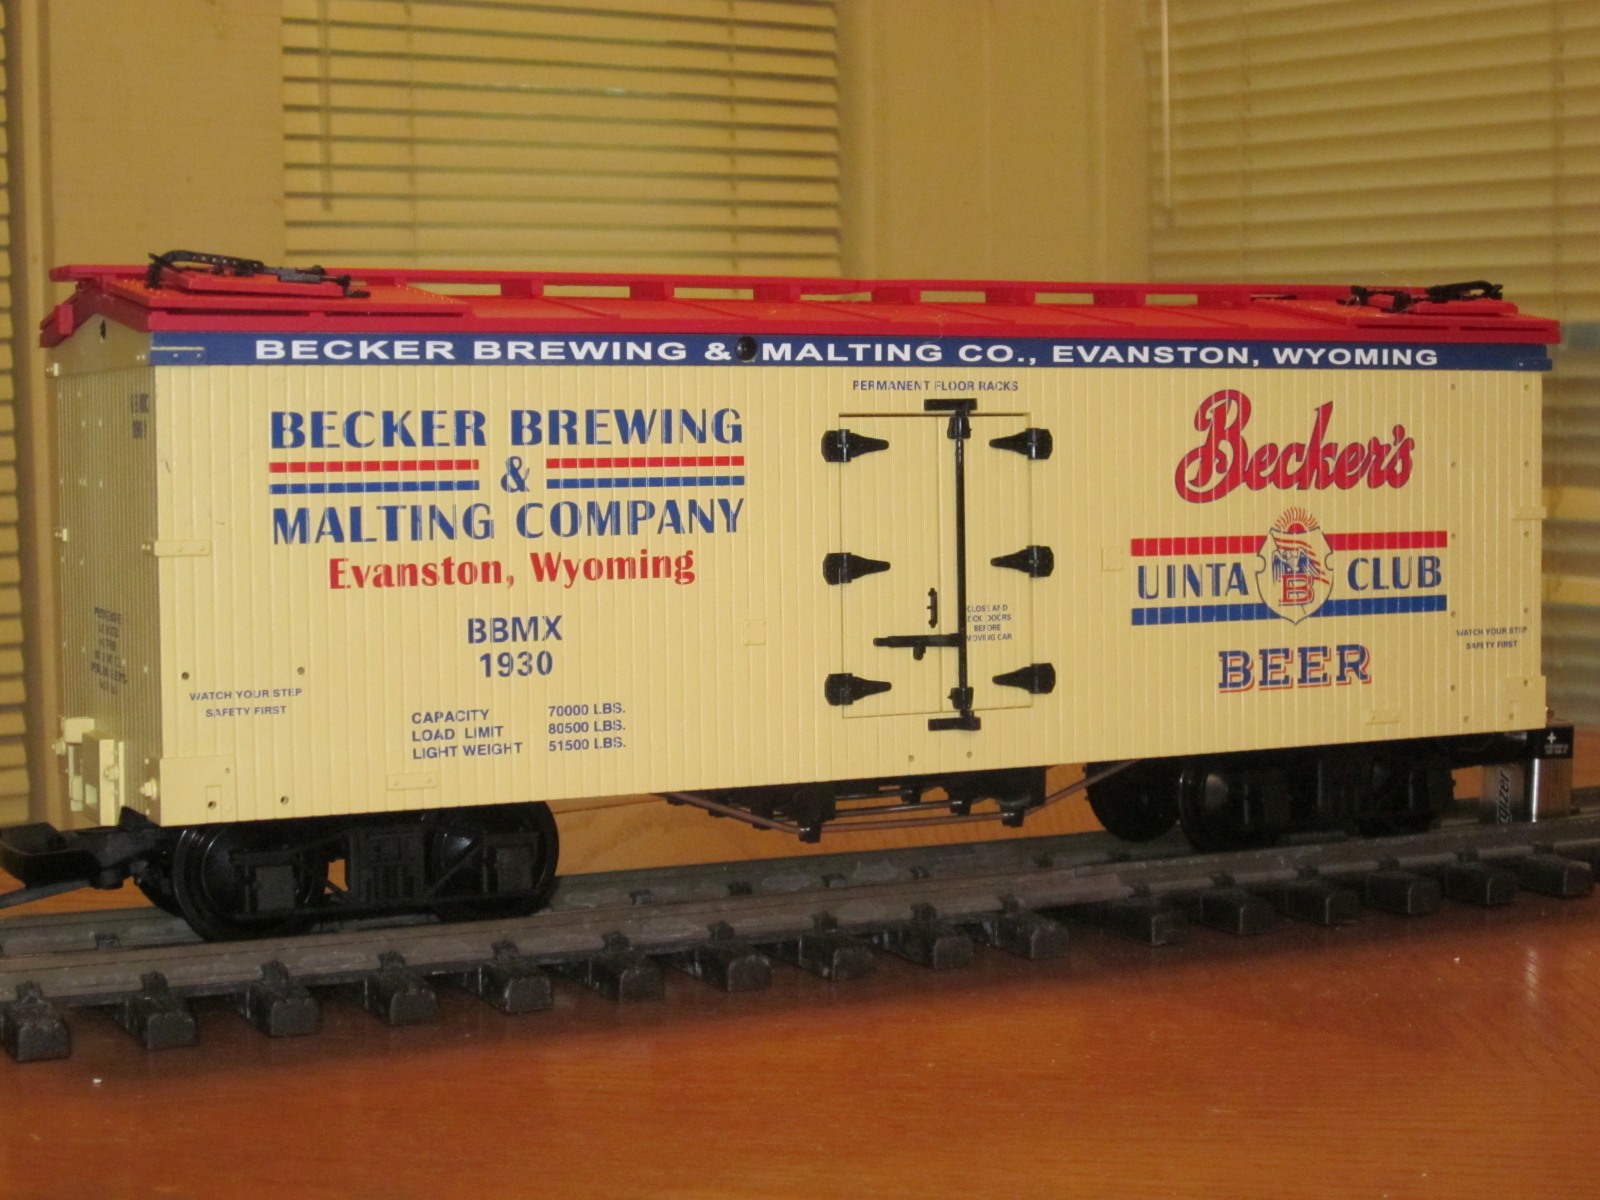 R16375 Beckers Beer BBMX 1930